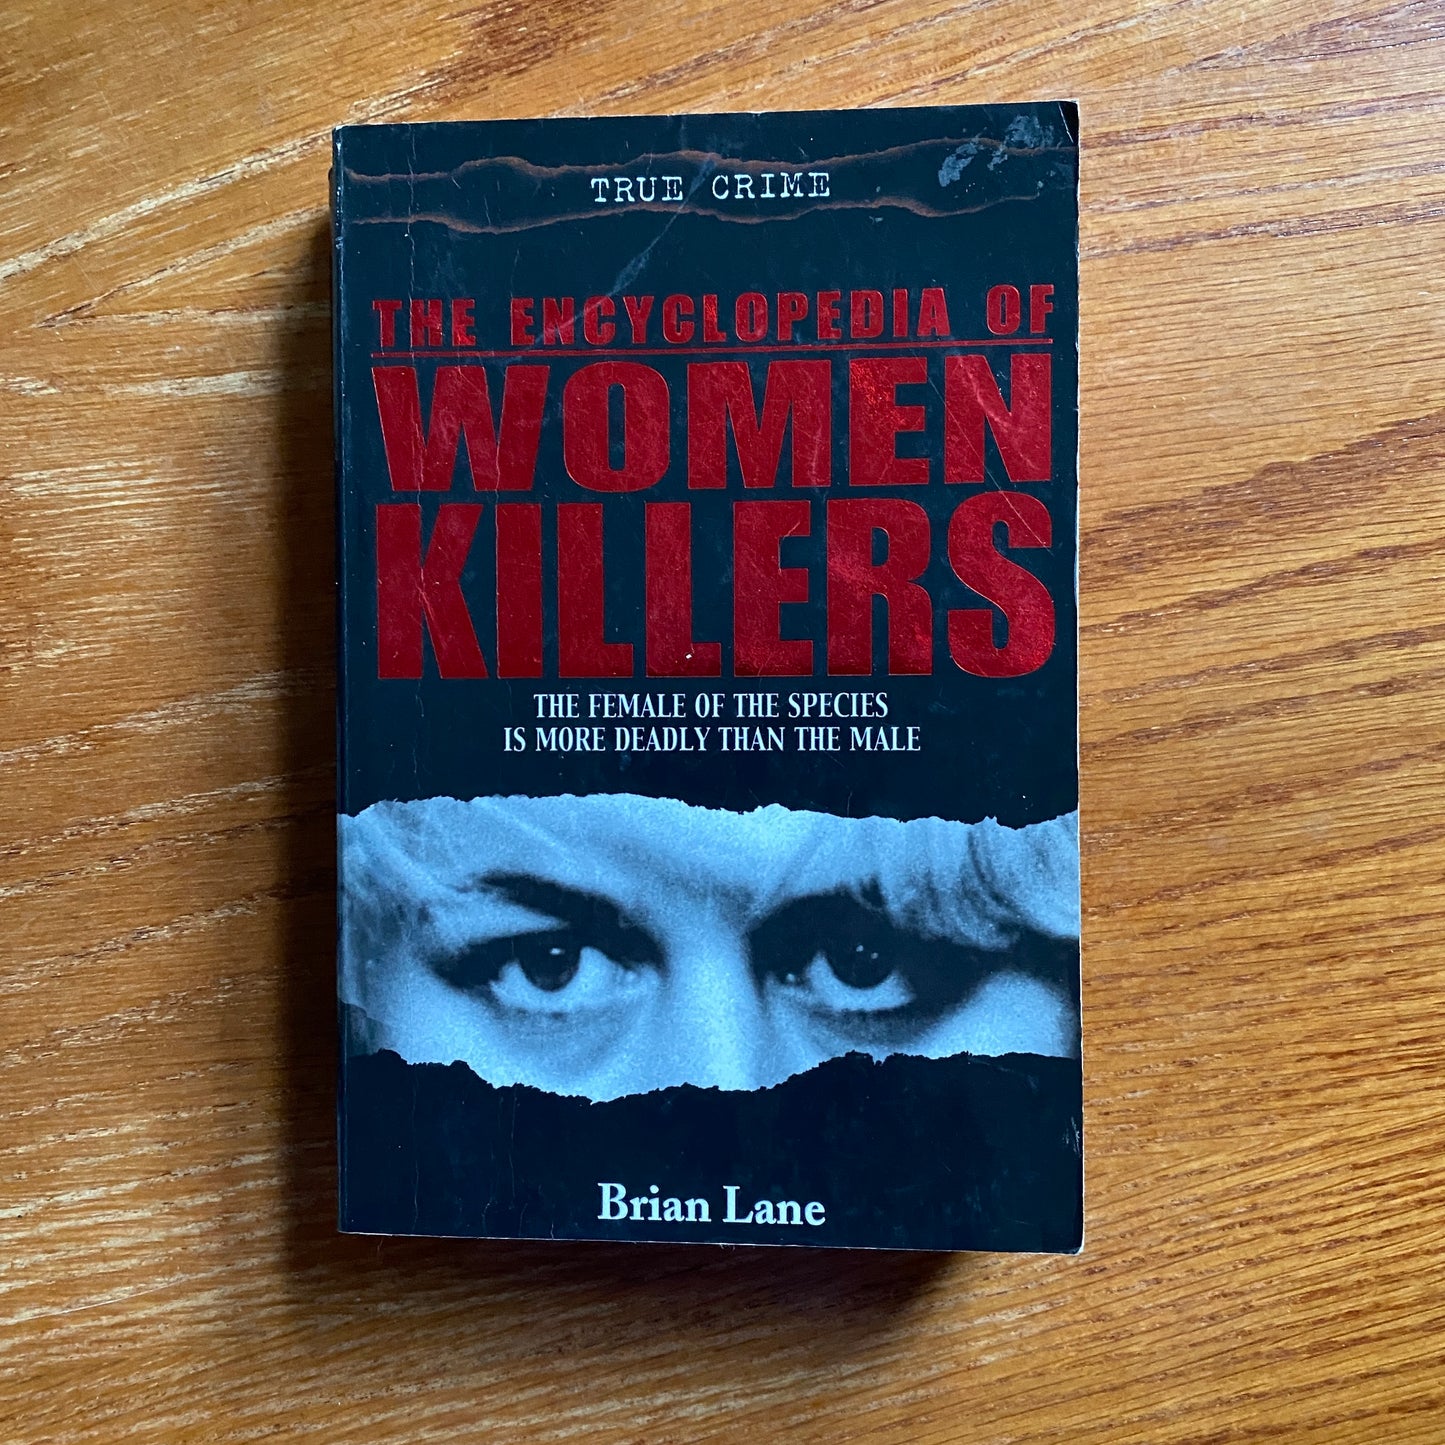 The Encyclopedia of Women killers - Brian Lane